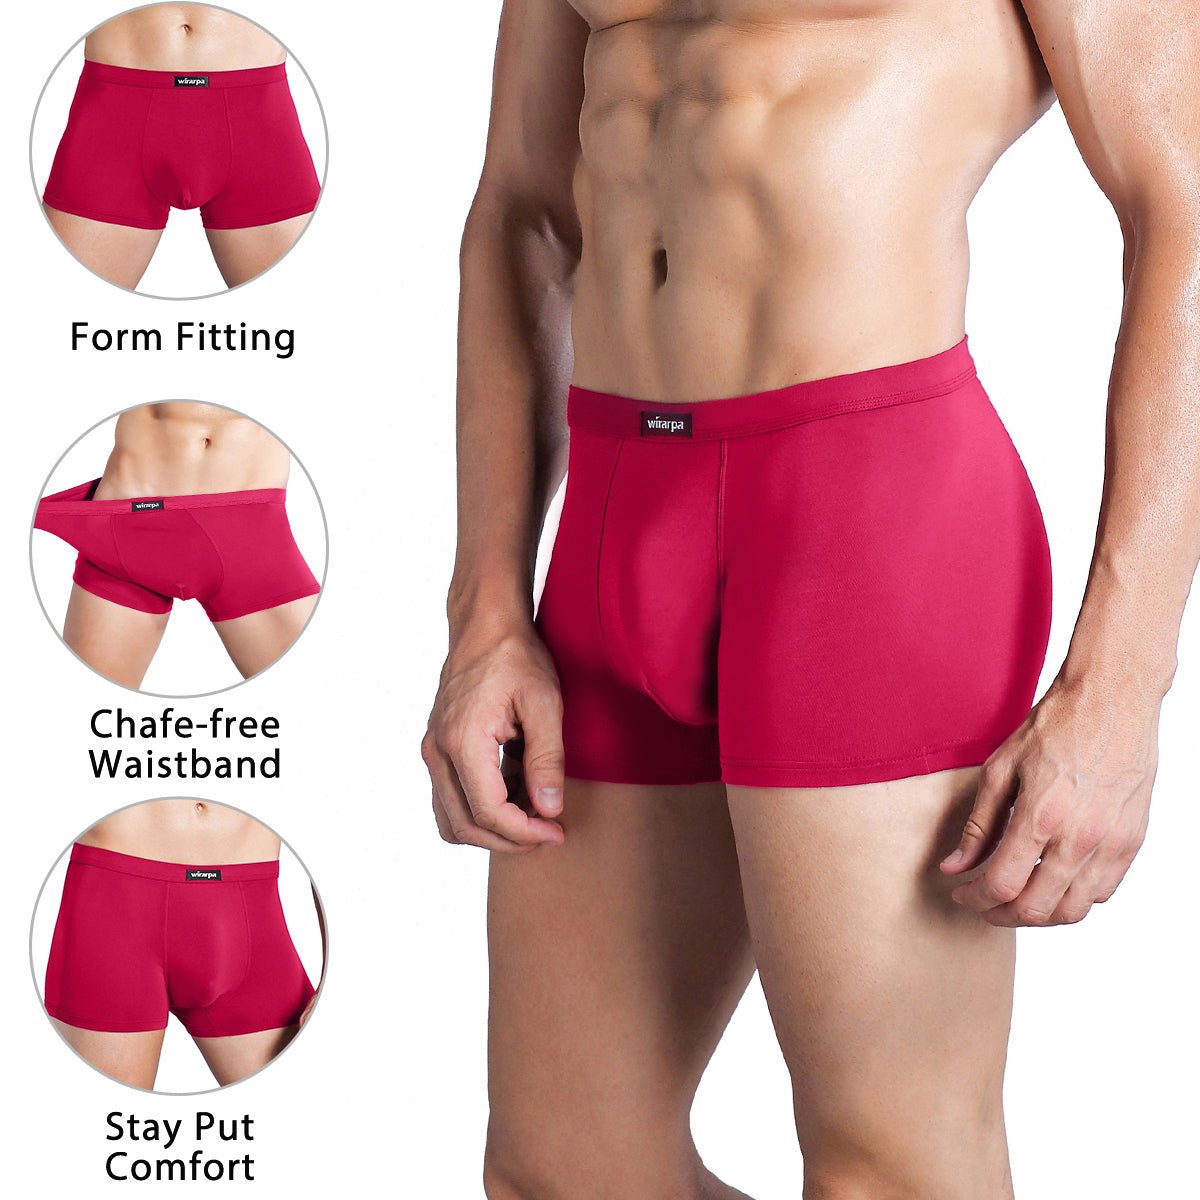 wirarpa Men’s Breathable Viscose Trunk Underwear Solid 4 Pack - Wirarpa Apparel, Inc.